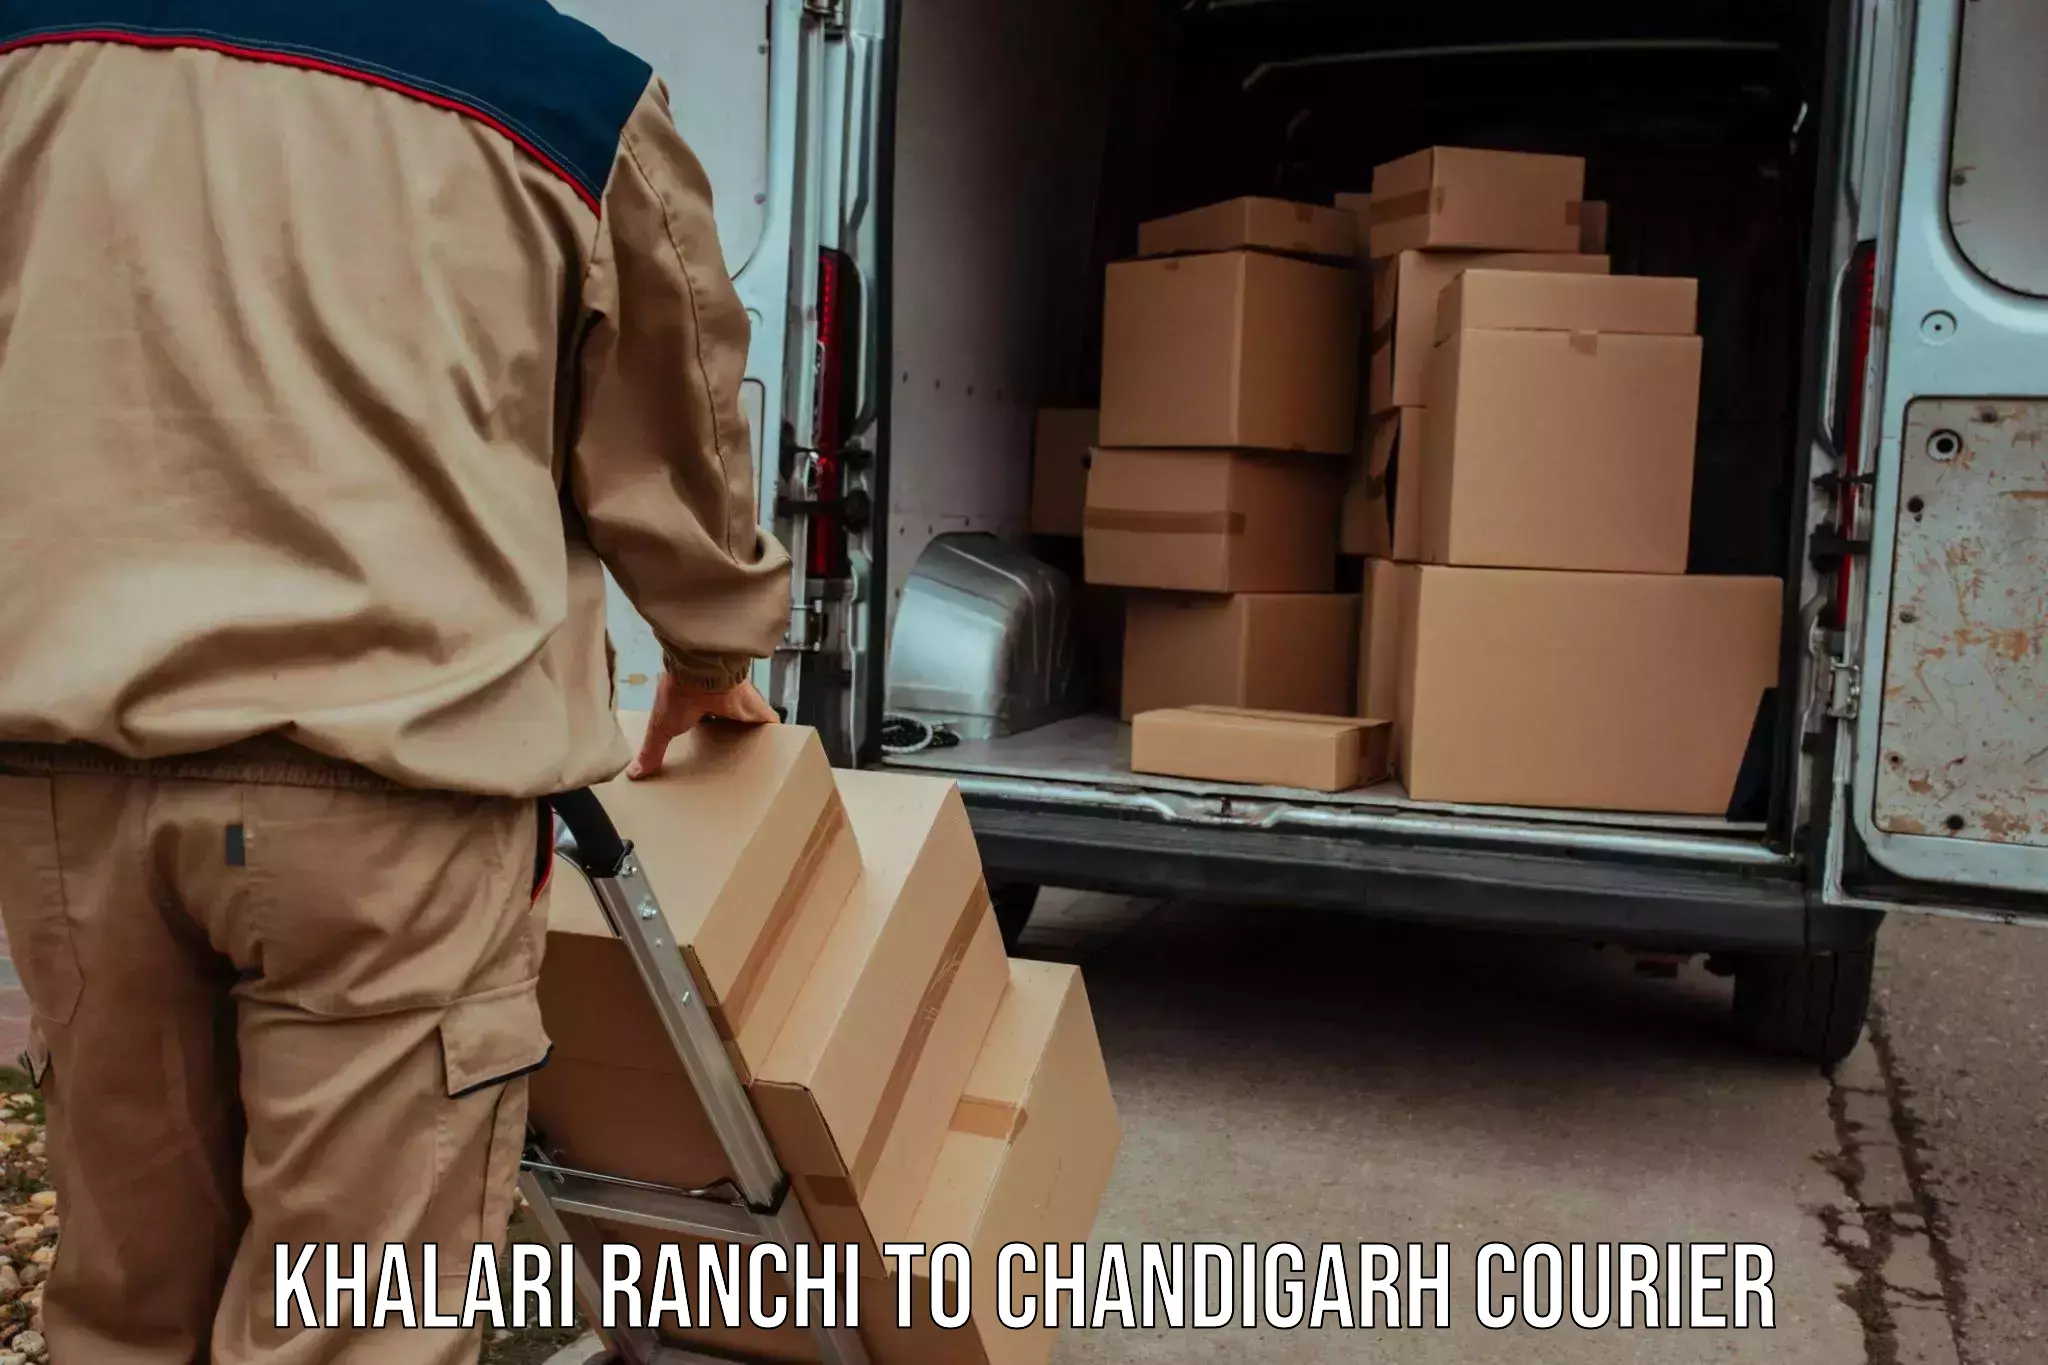 Expedited shipping methods Khalari Ranchi to Chandigarh